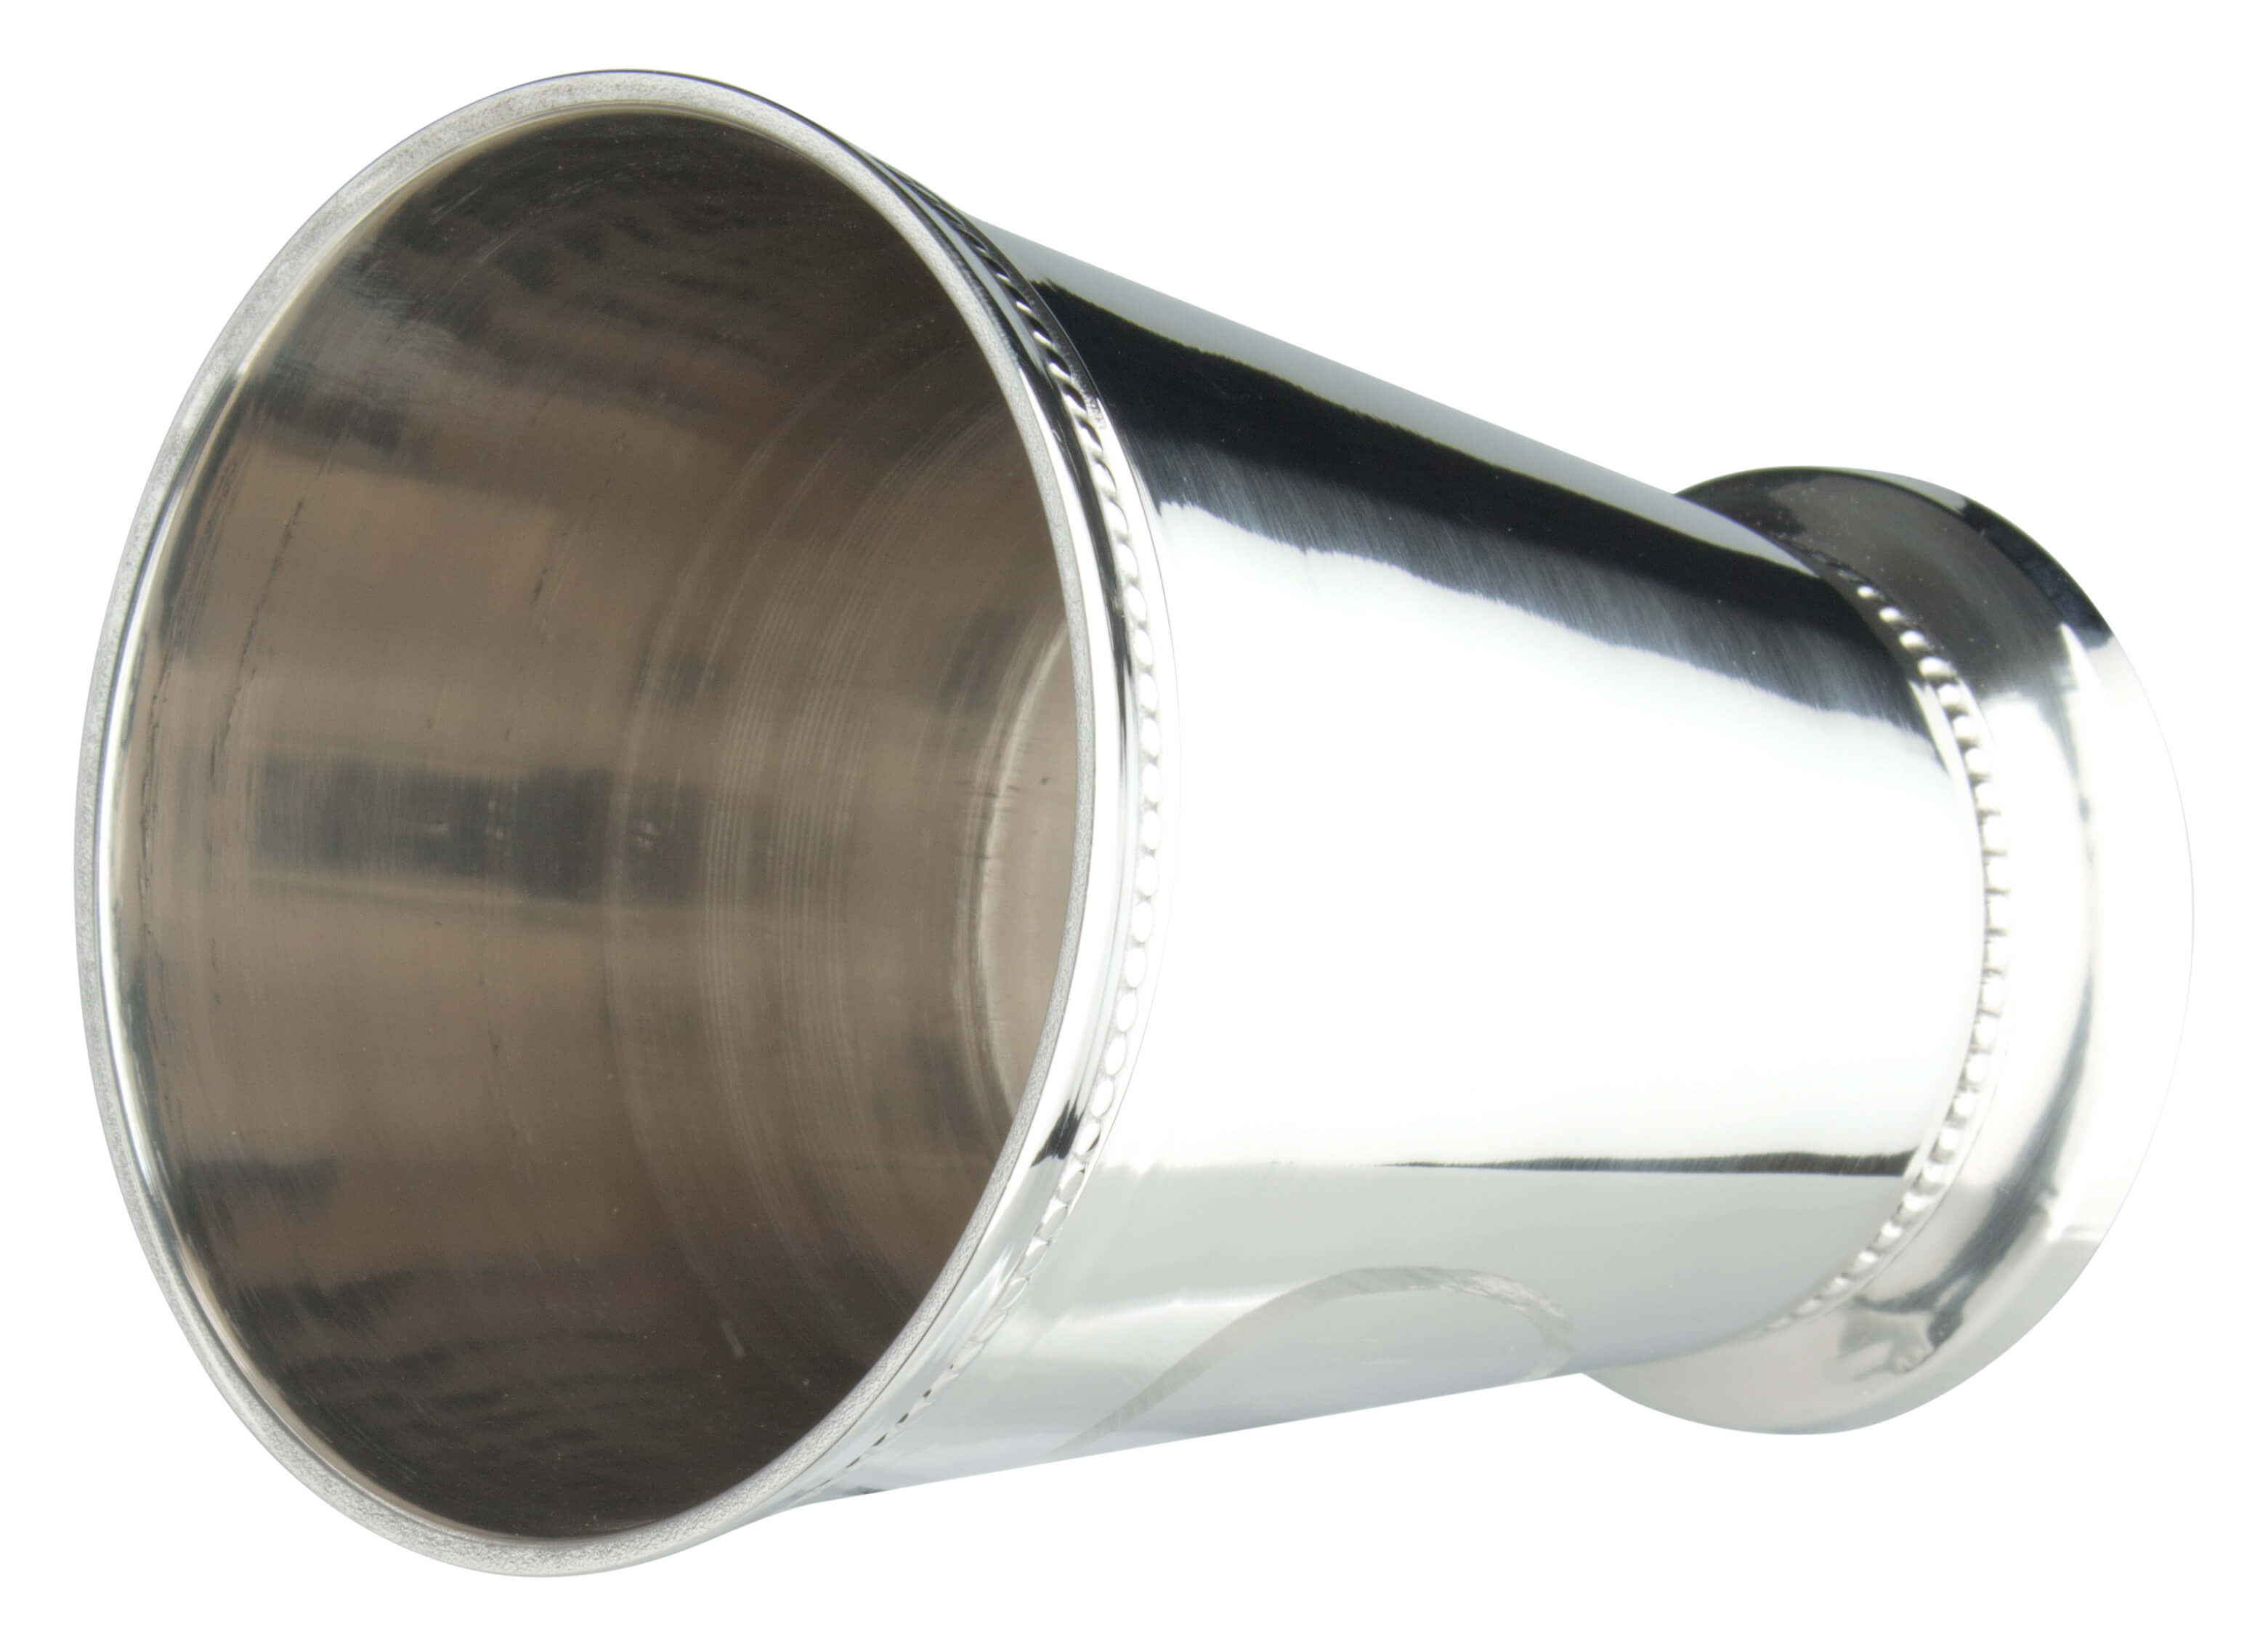 Julep mug, stainless steel, irregular stock - 320ml